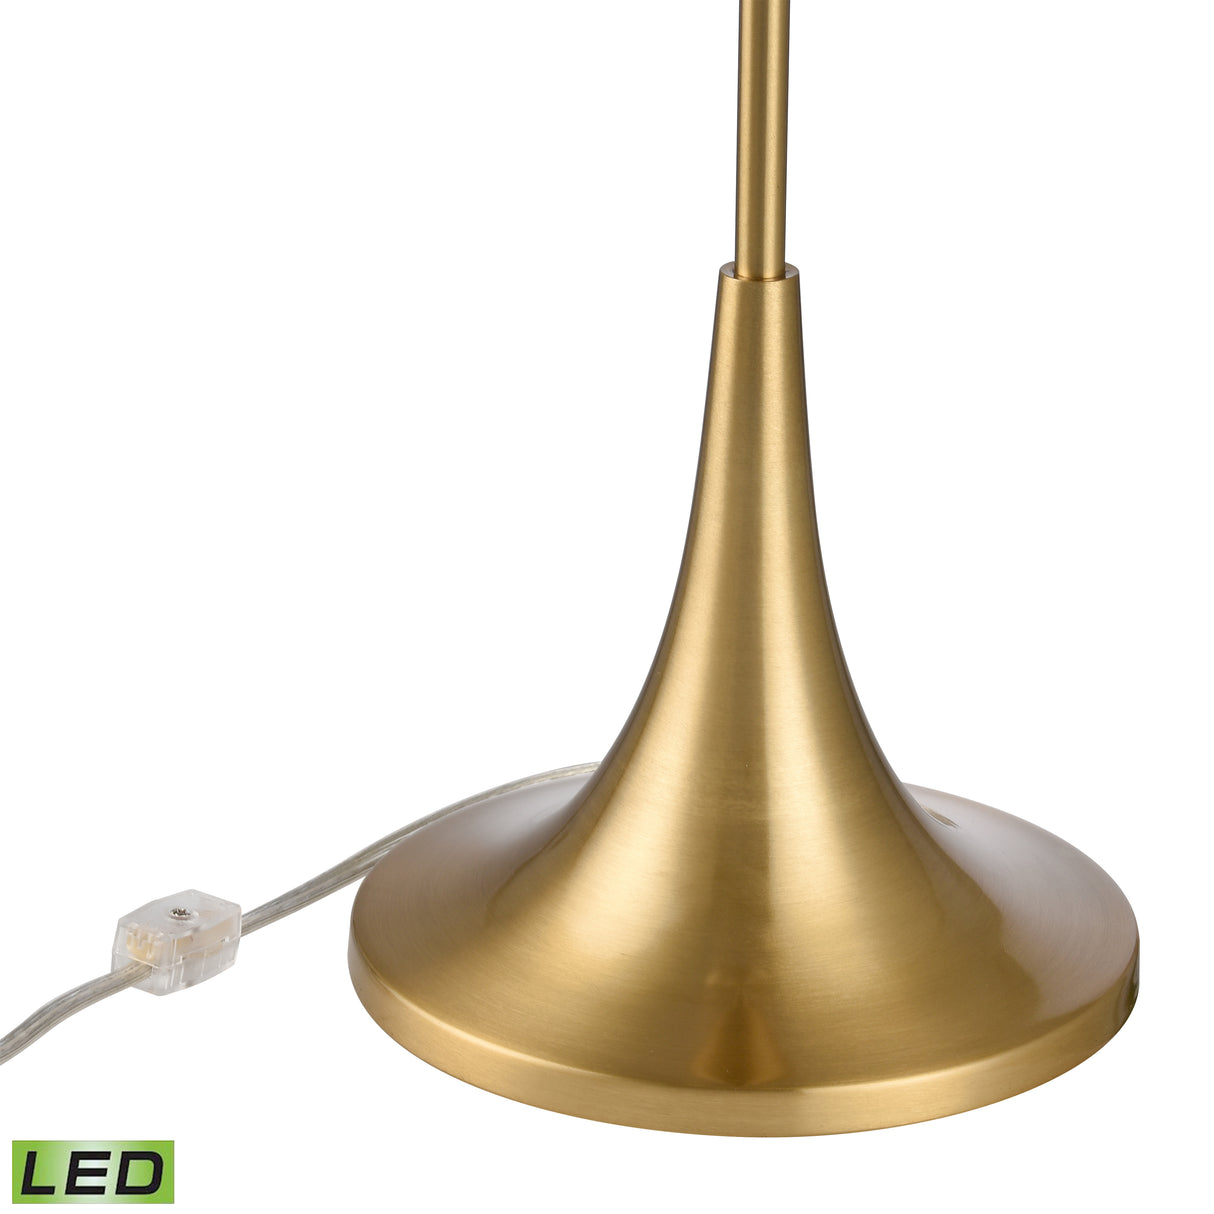 Elk H0019-9509-LED Robin Avenue 30'' High 1-Light Table Lamp - Satin Gold - Includes LED Bulb